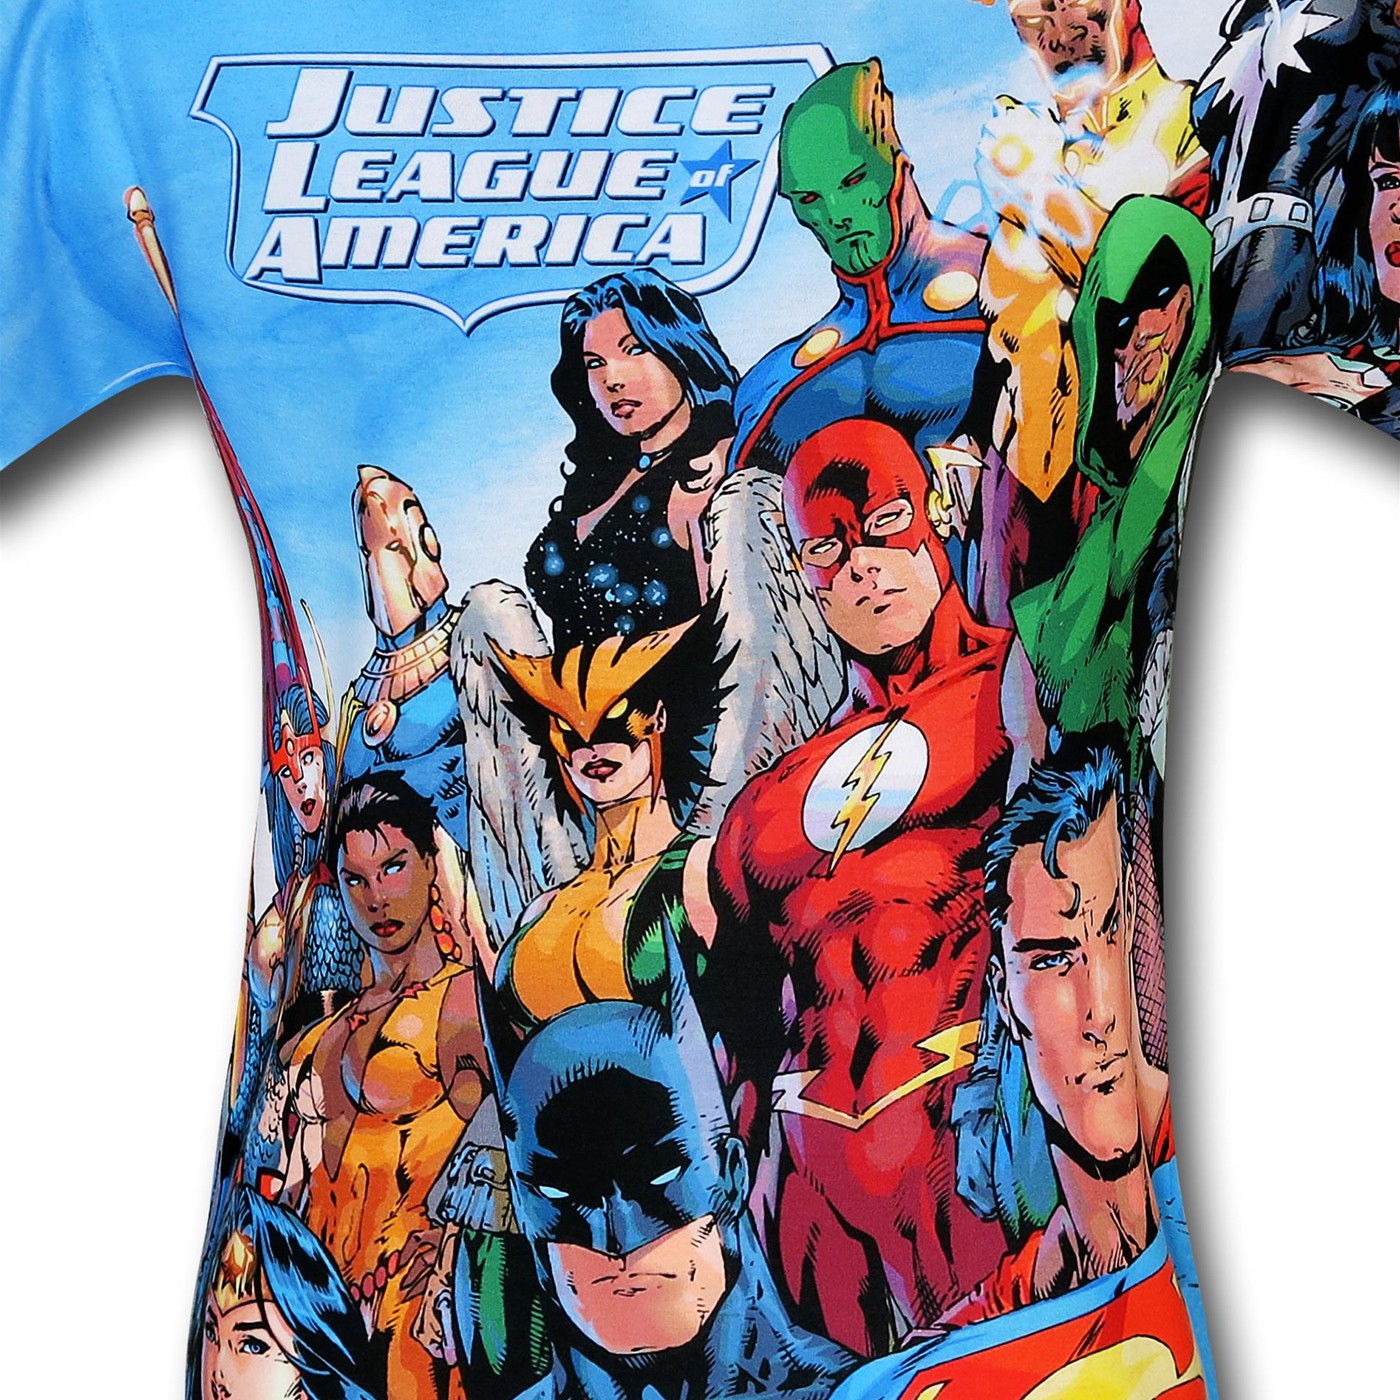 Justice League Group Sublimated T-Shirt